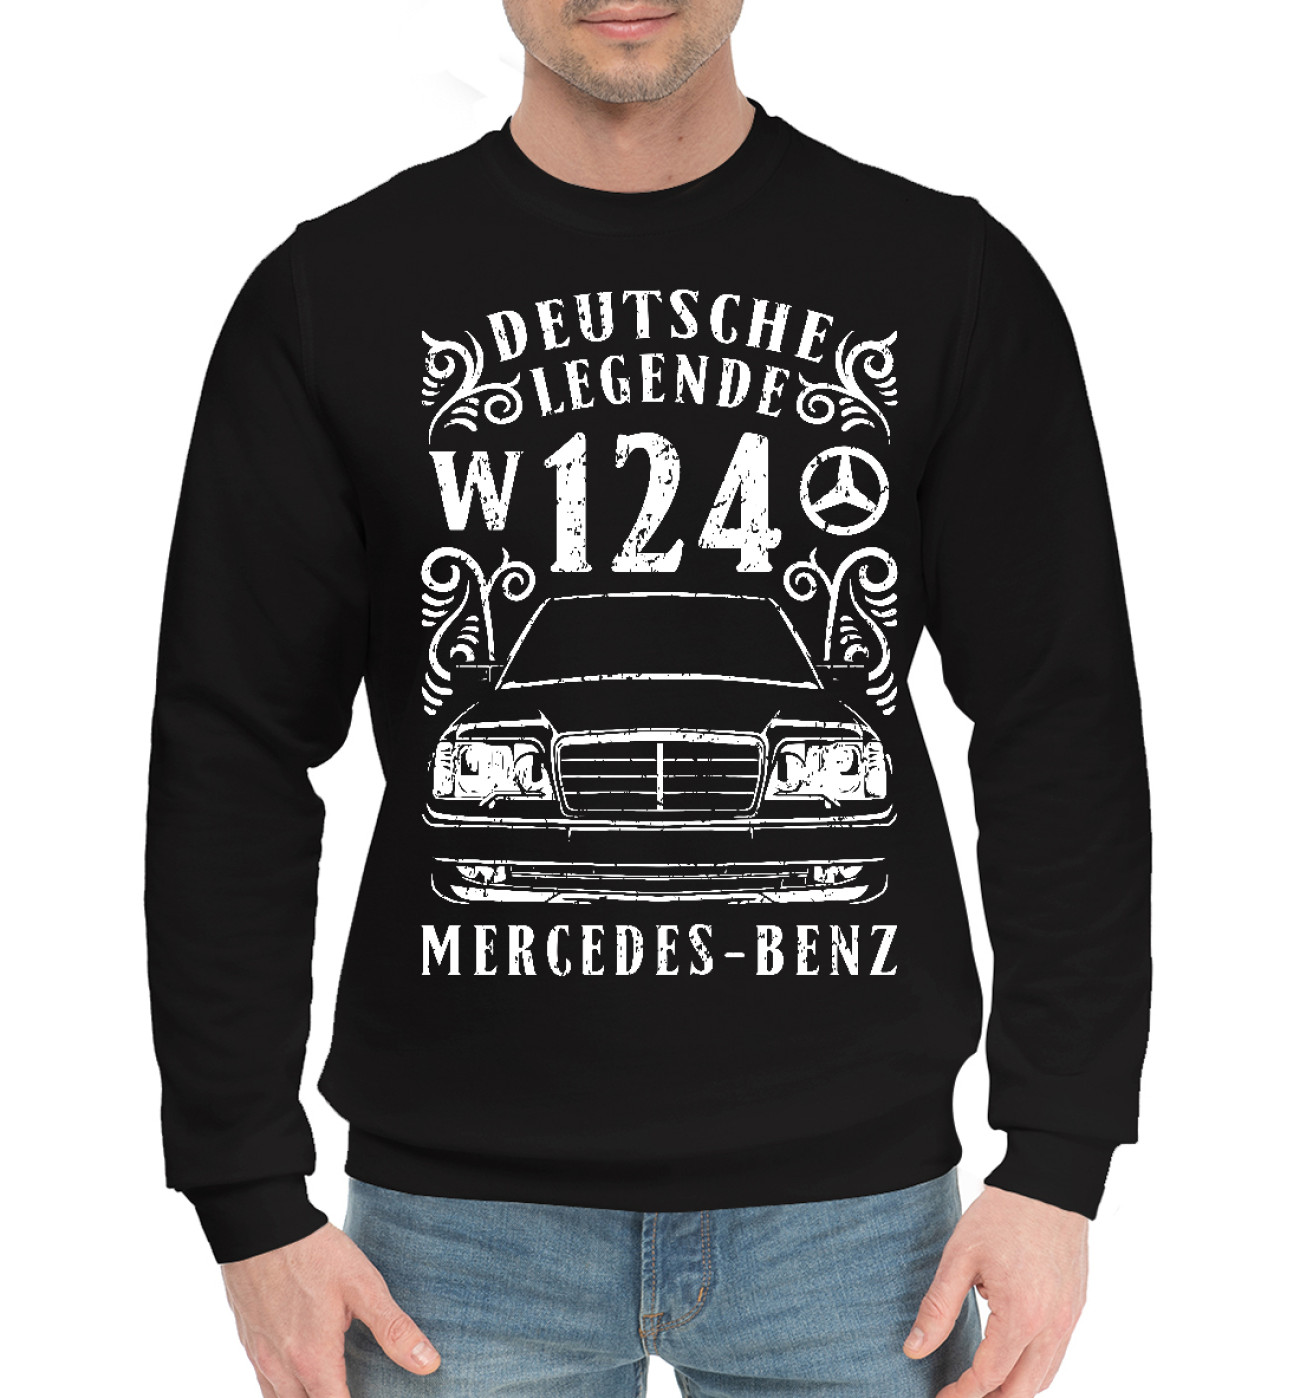 Мужской Хлопковый свитшот Mercedes-Benz W124, артикул: MER-606694-hsw-2